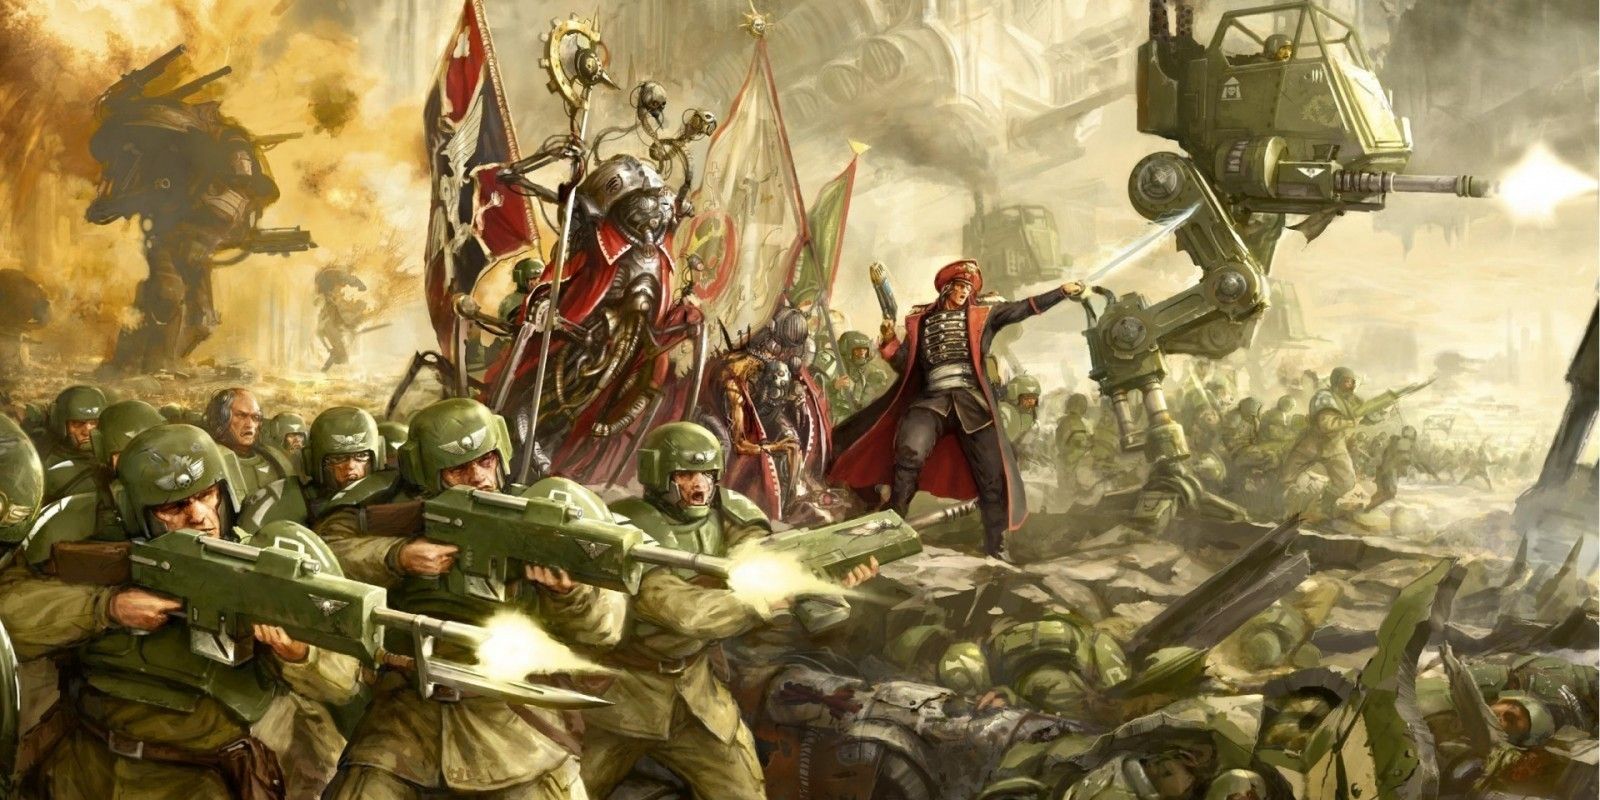 A battalion of Imperial Guard troops in battle in Warhammer 40K.